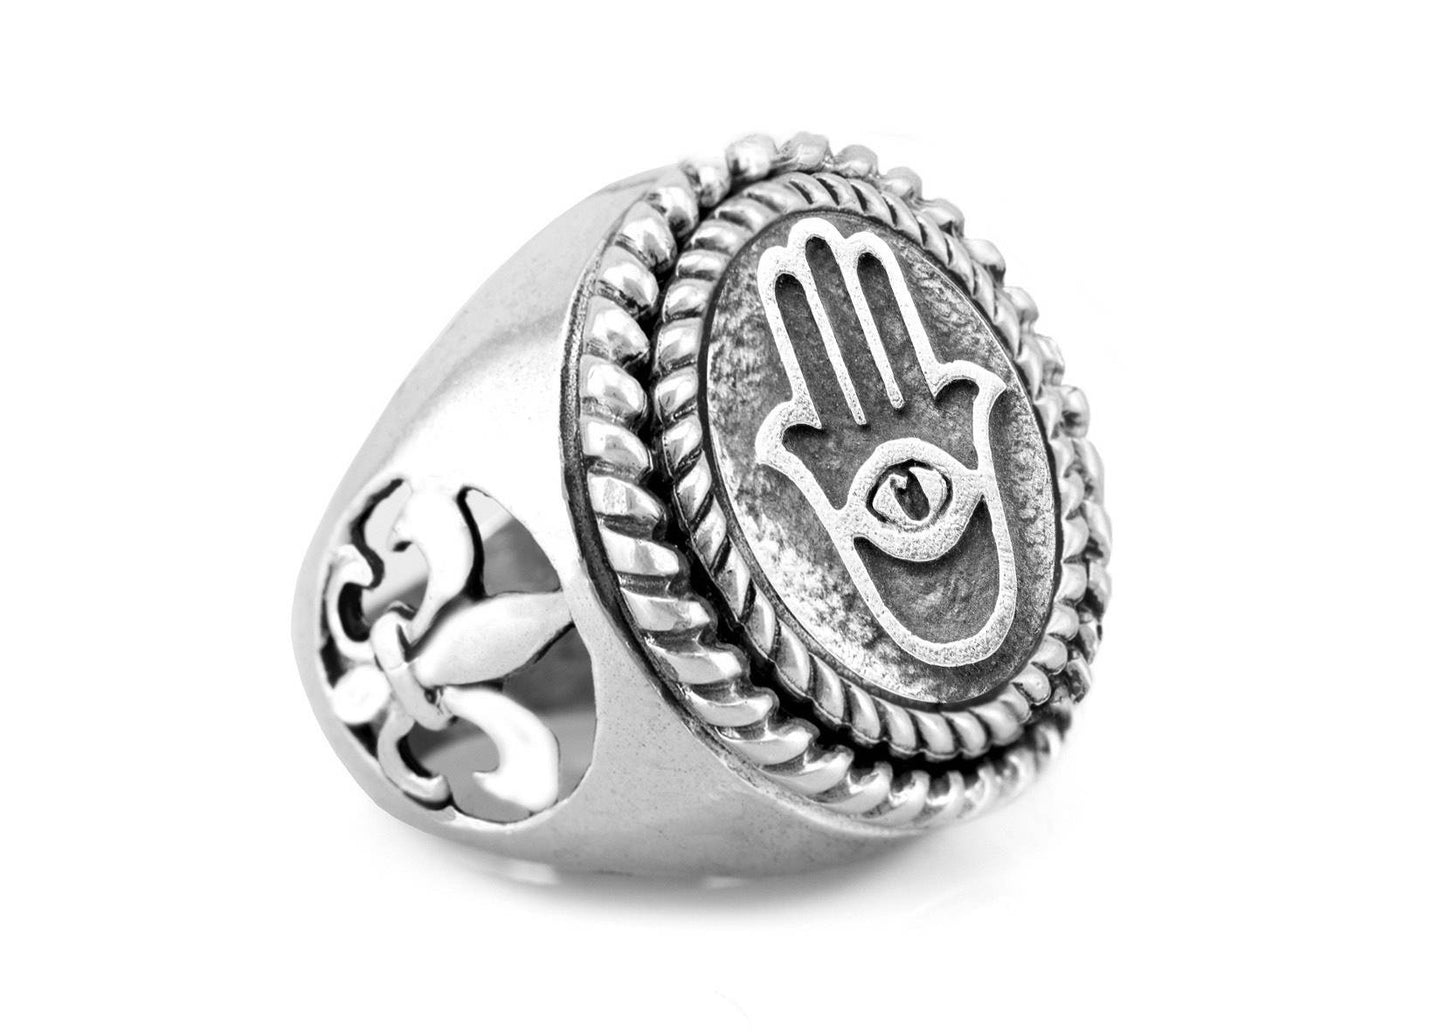 Hamsa Ring with fleur de lis symbol on the side: Hamsa jewelry